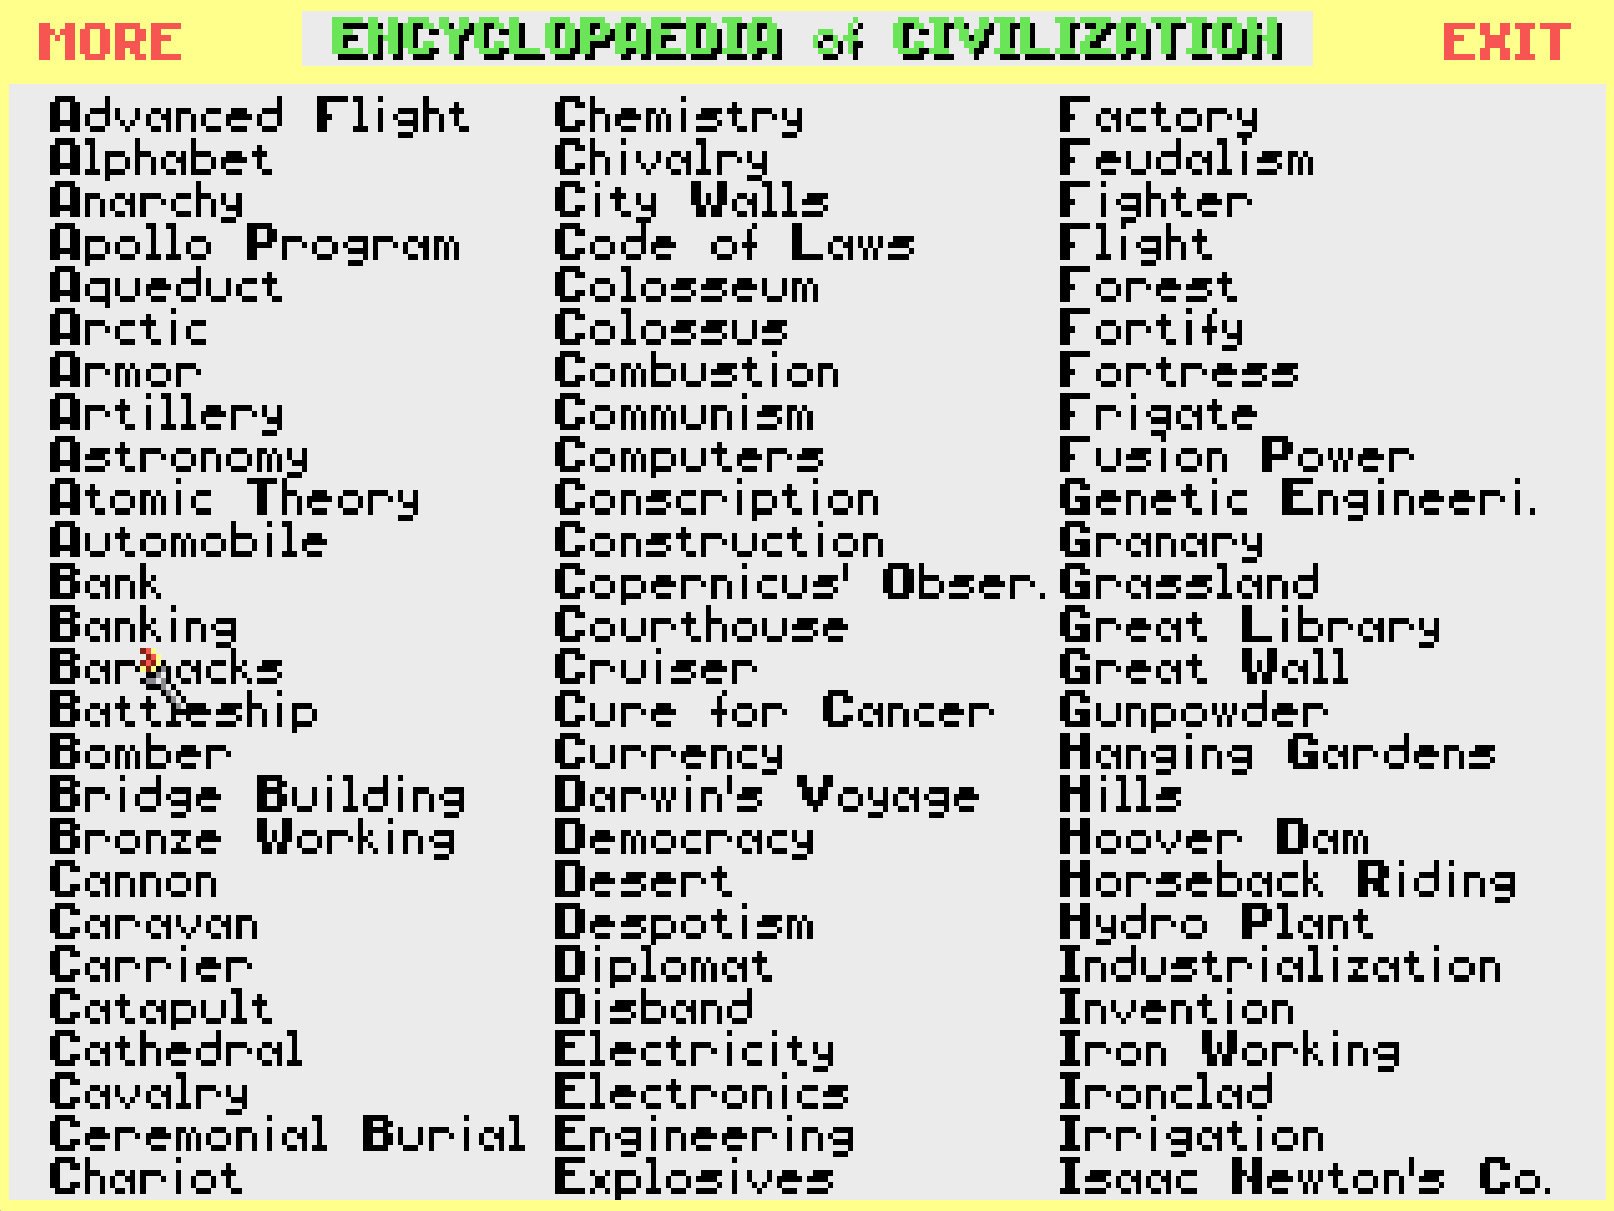 Page 1 of 1991's Civilization in-game encyclopedia, the Civilopedia.